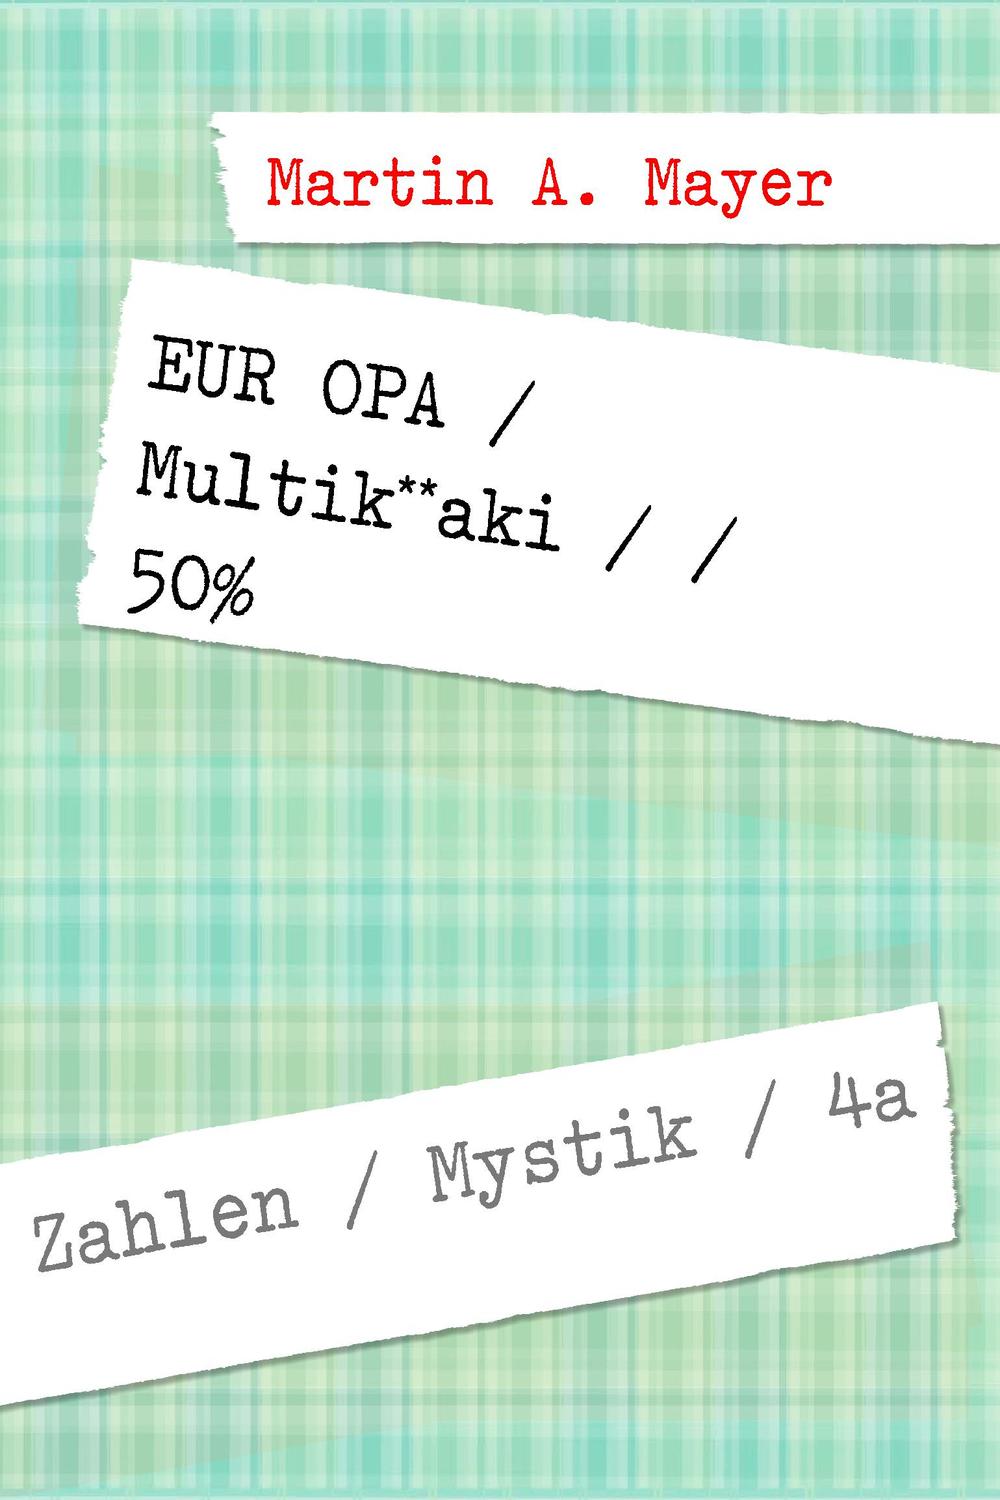 EUR OPA  /  Multik**aki  / / 50% - Martin A. Mayer